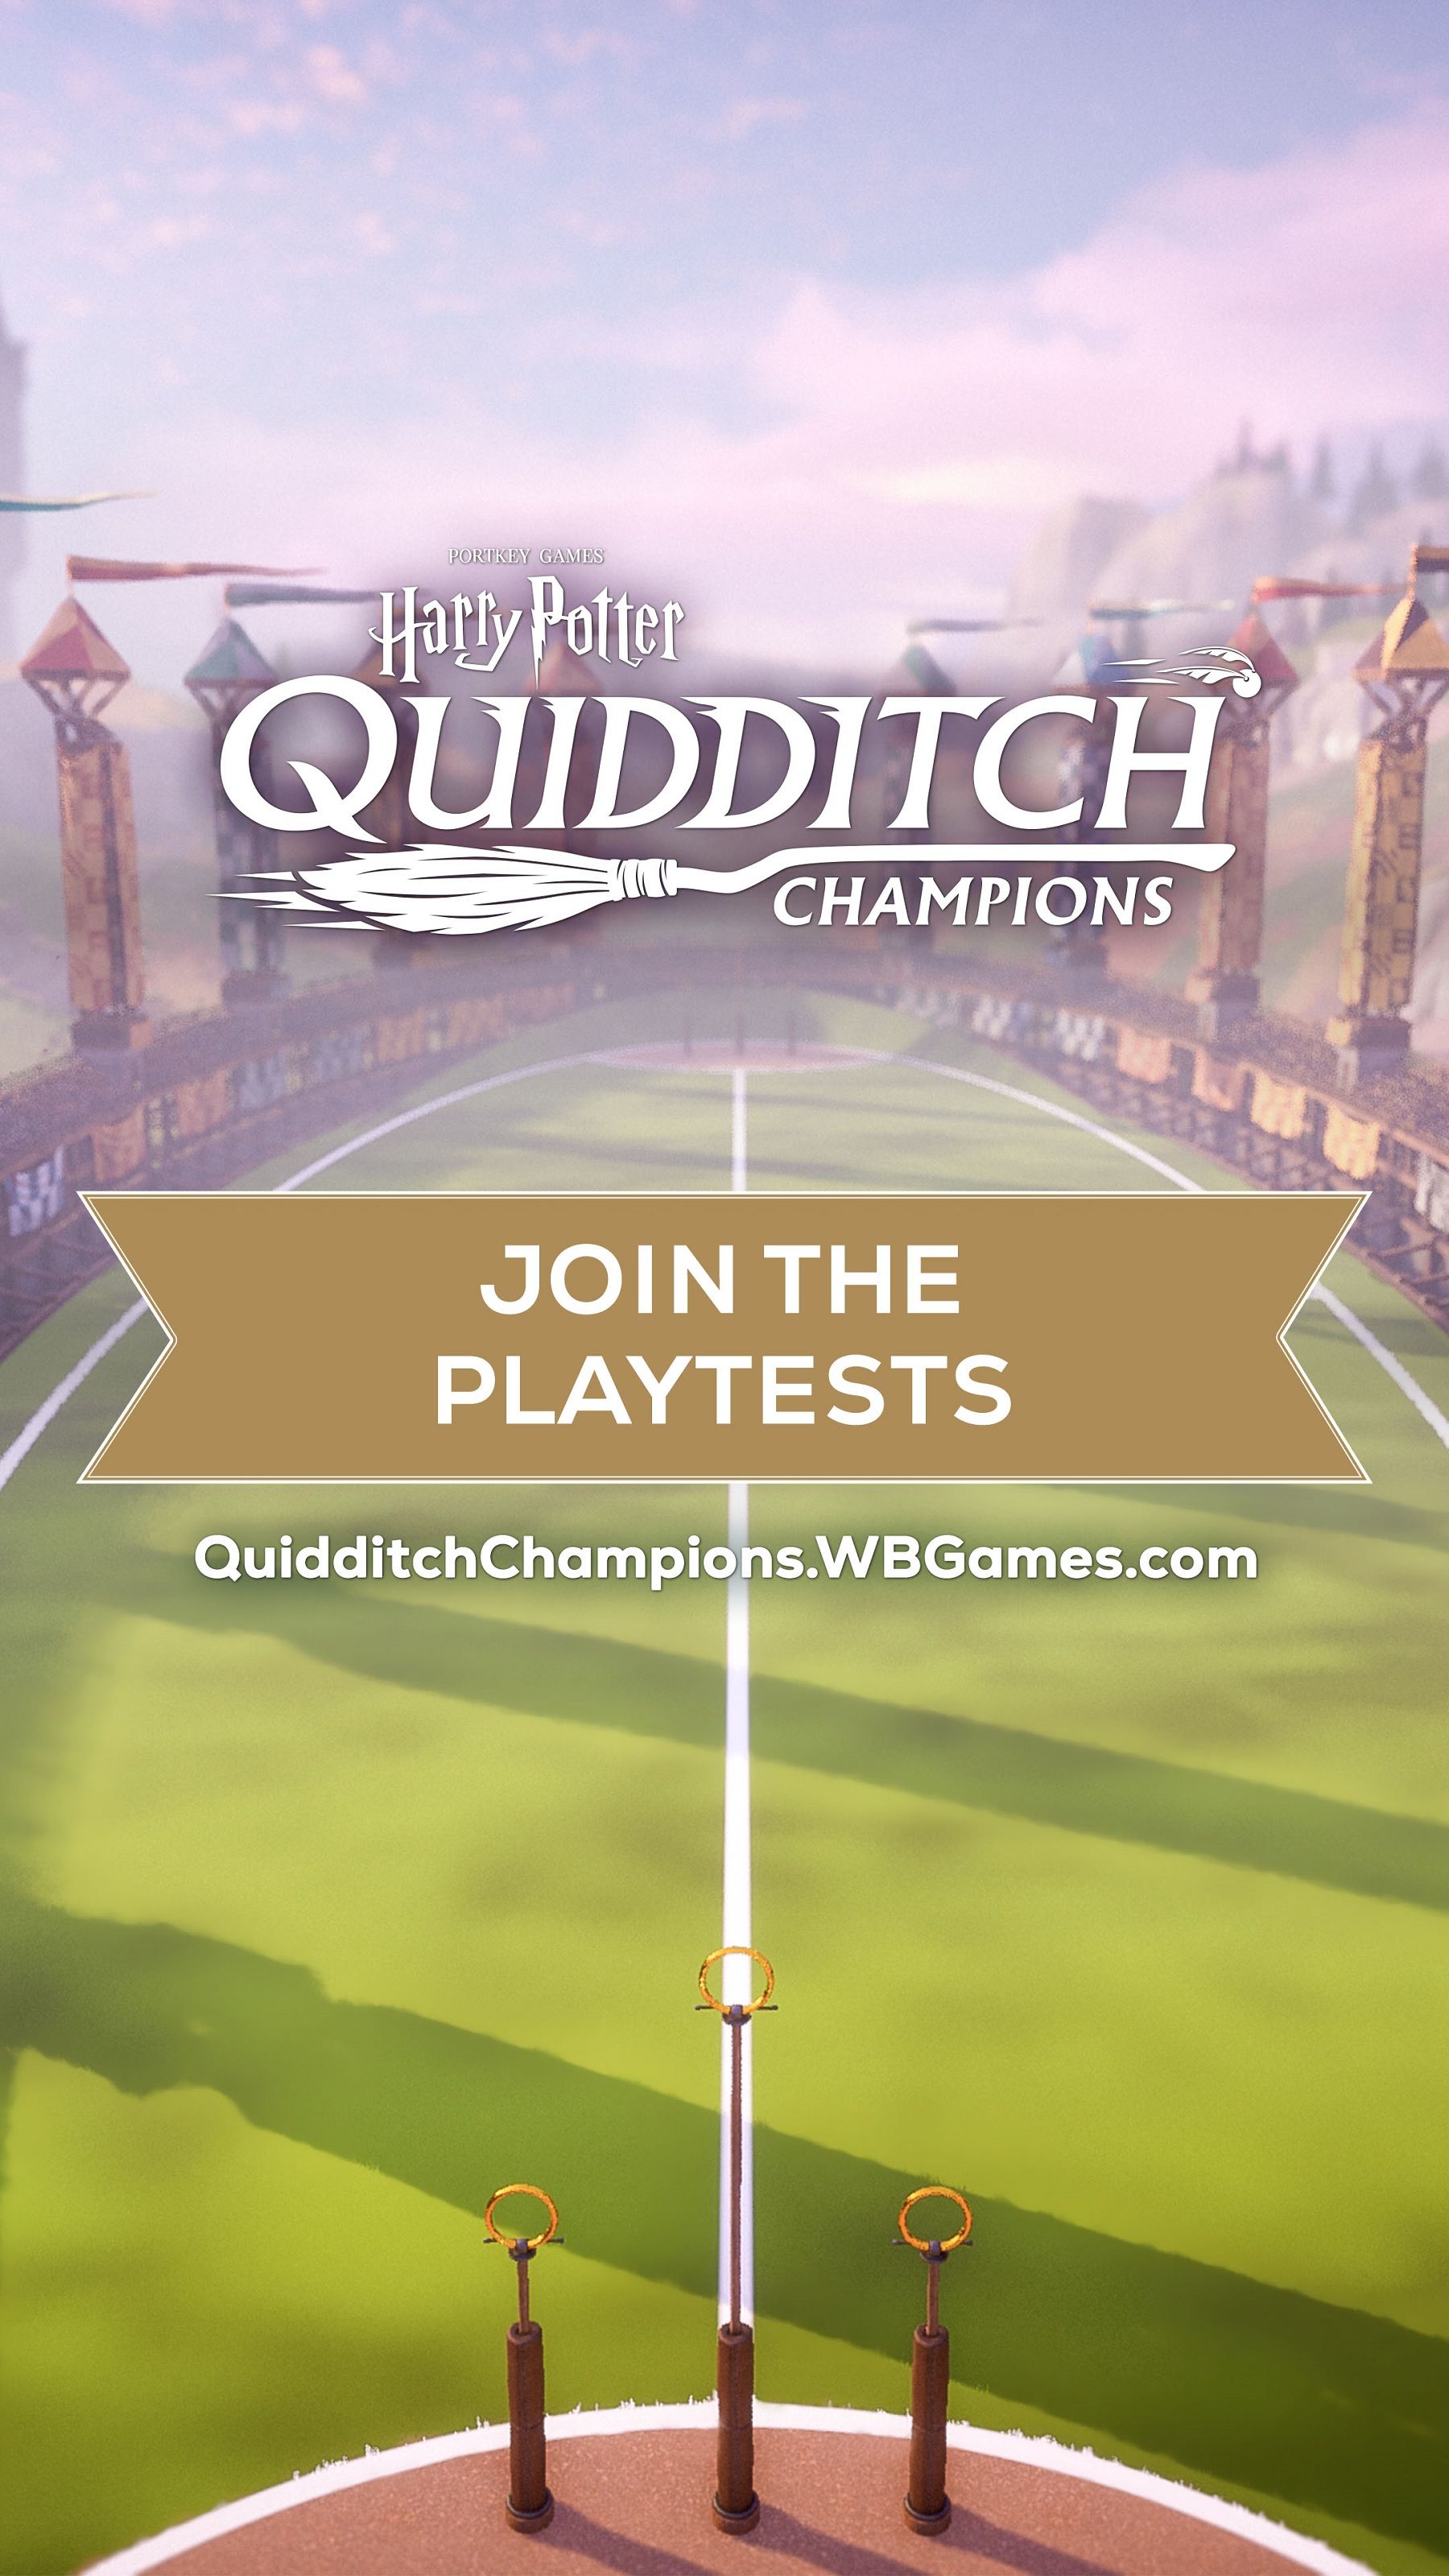 harry potter quidditch champions playtest